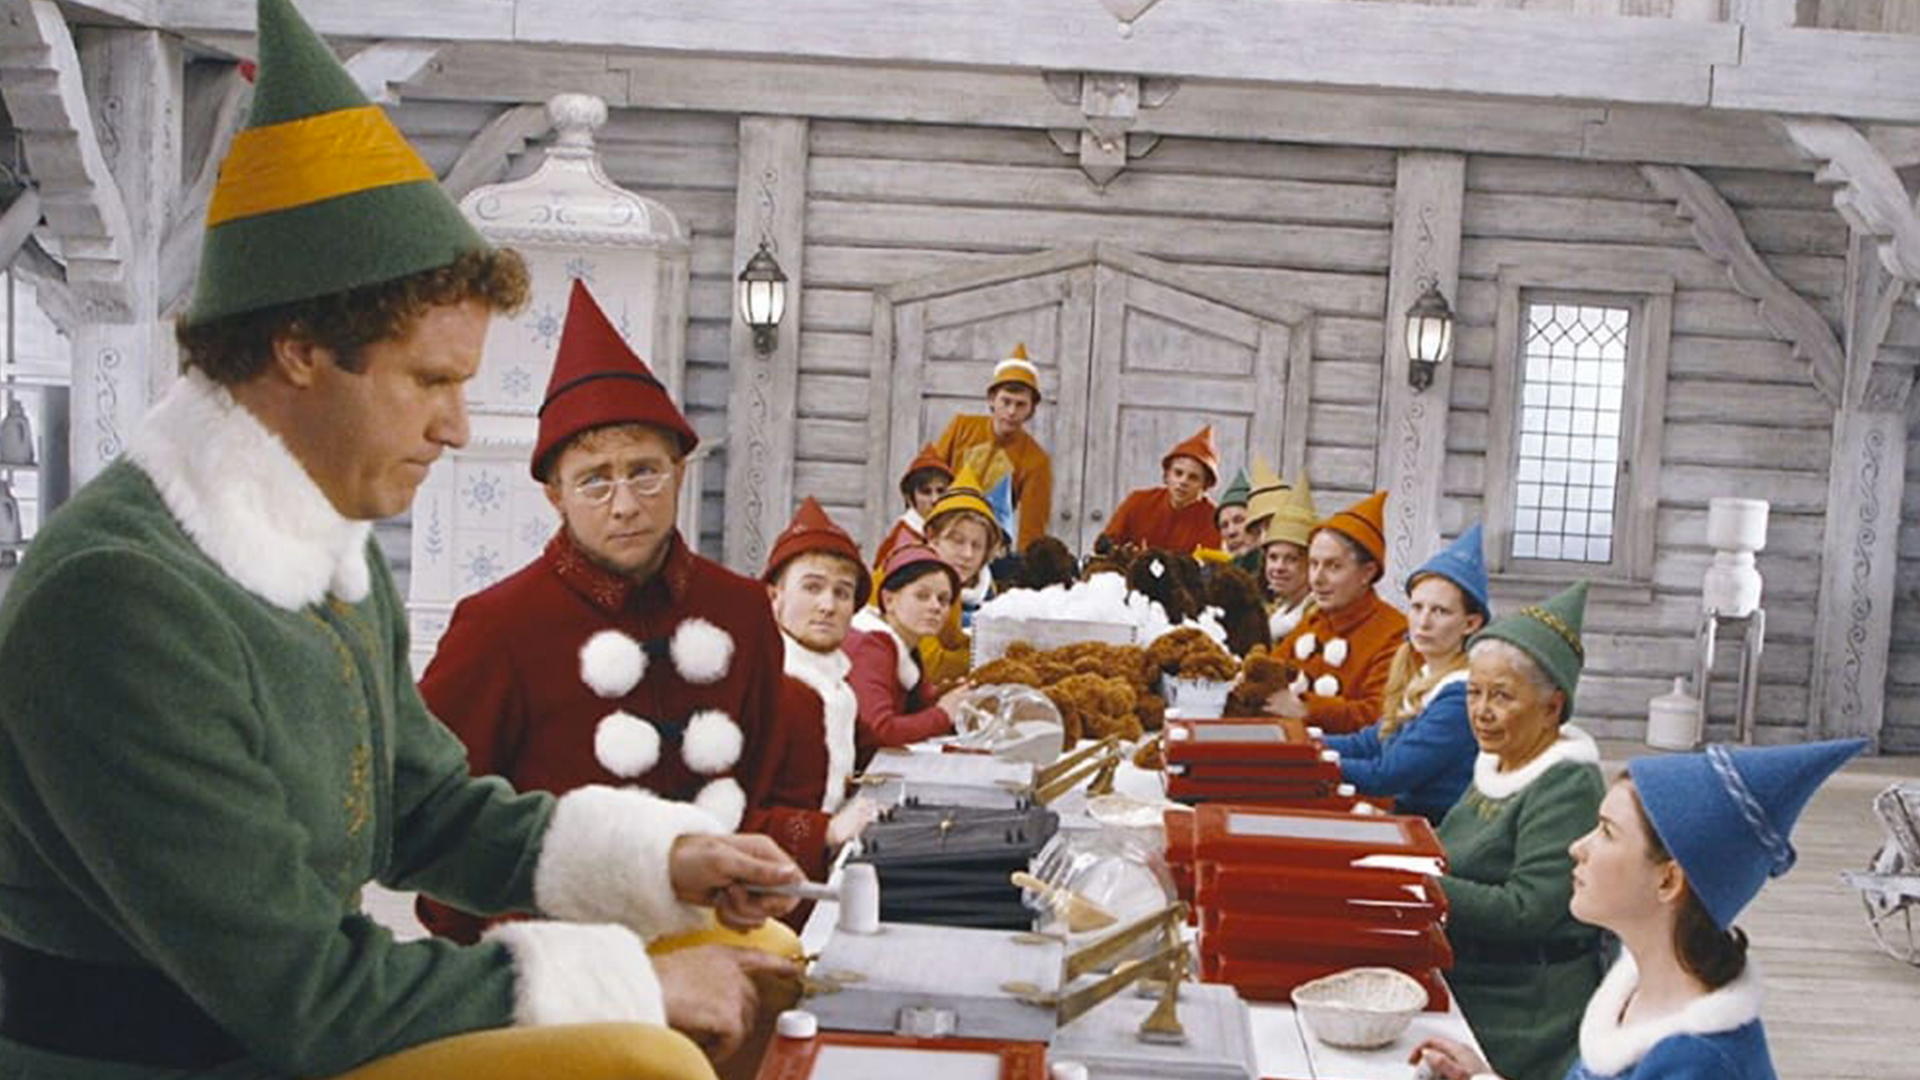 Scene from the film Elf